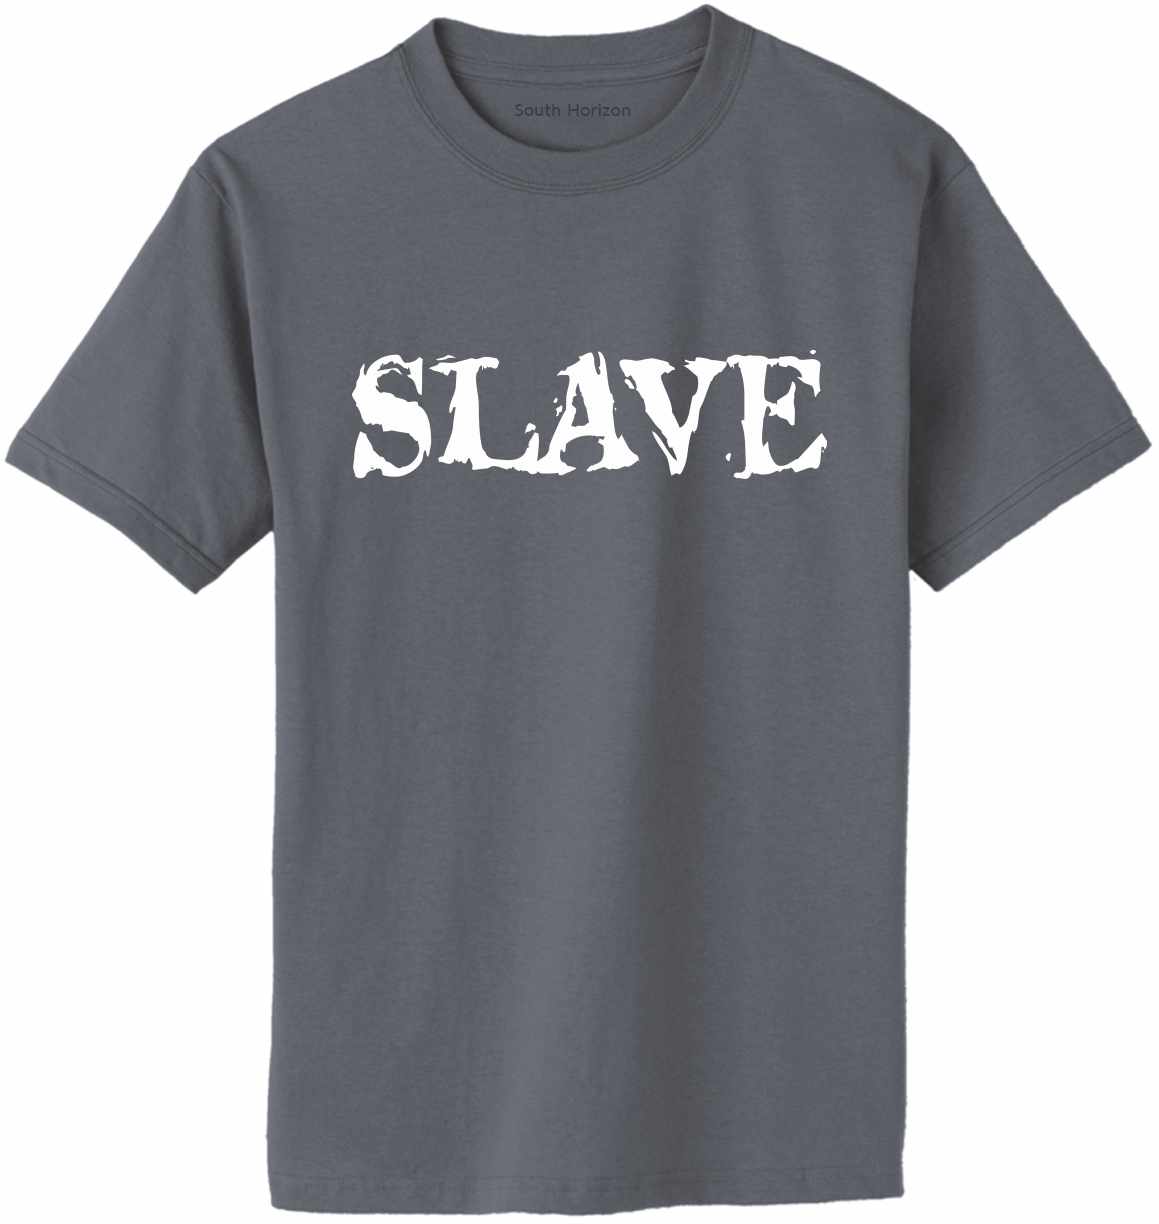 SLAVE Adult T-Shirt